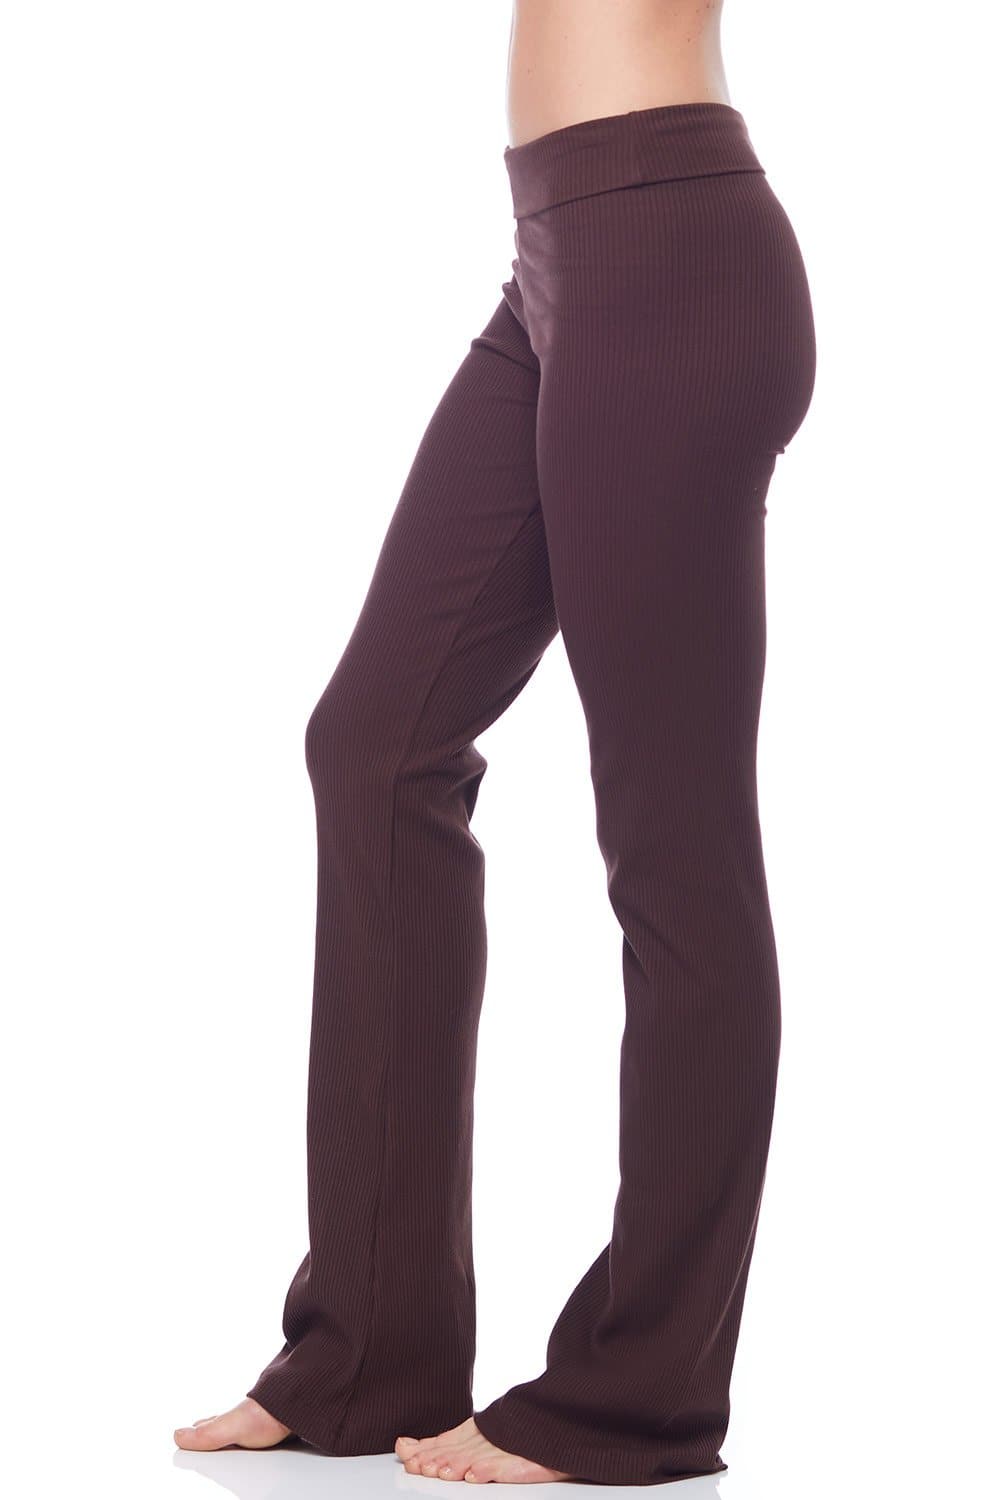 Sandra McCray Ribbed Foldover Pant - Evolve Fit Wear